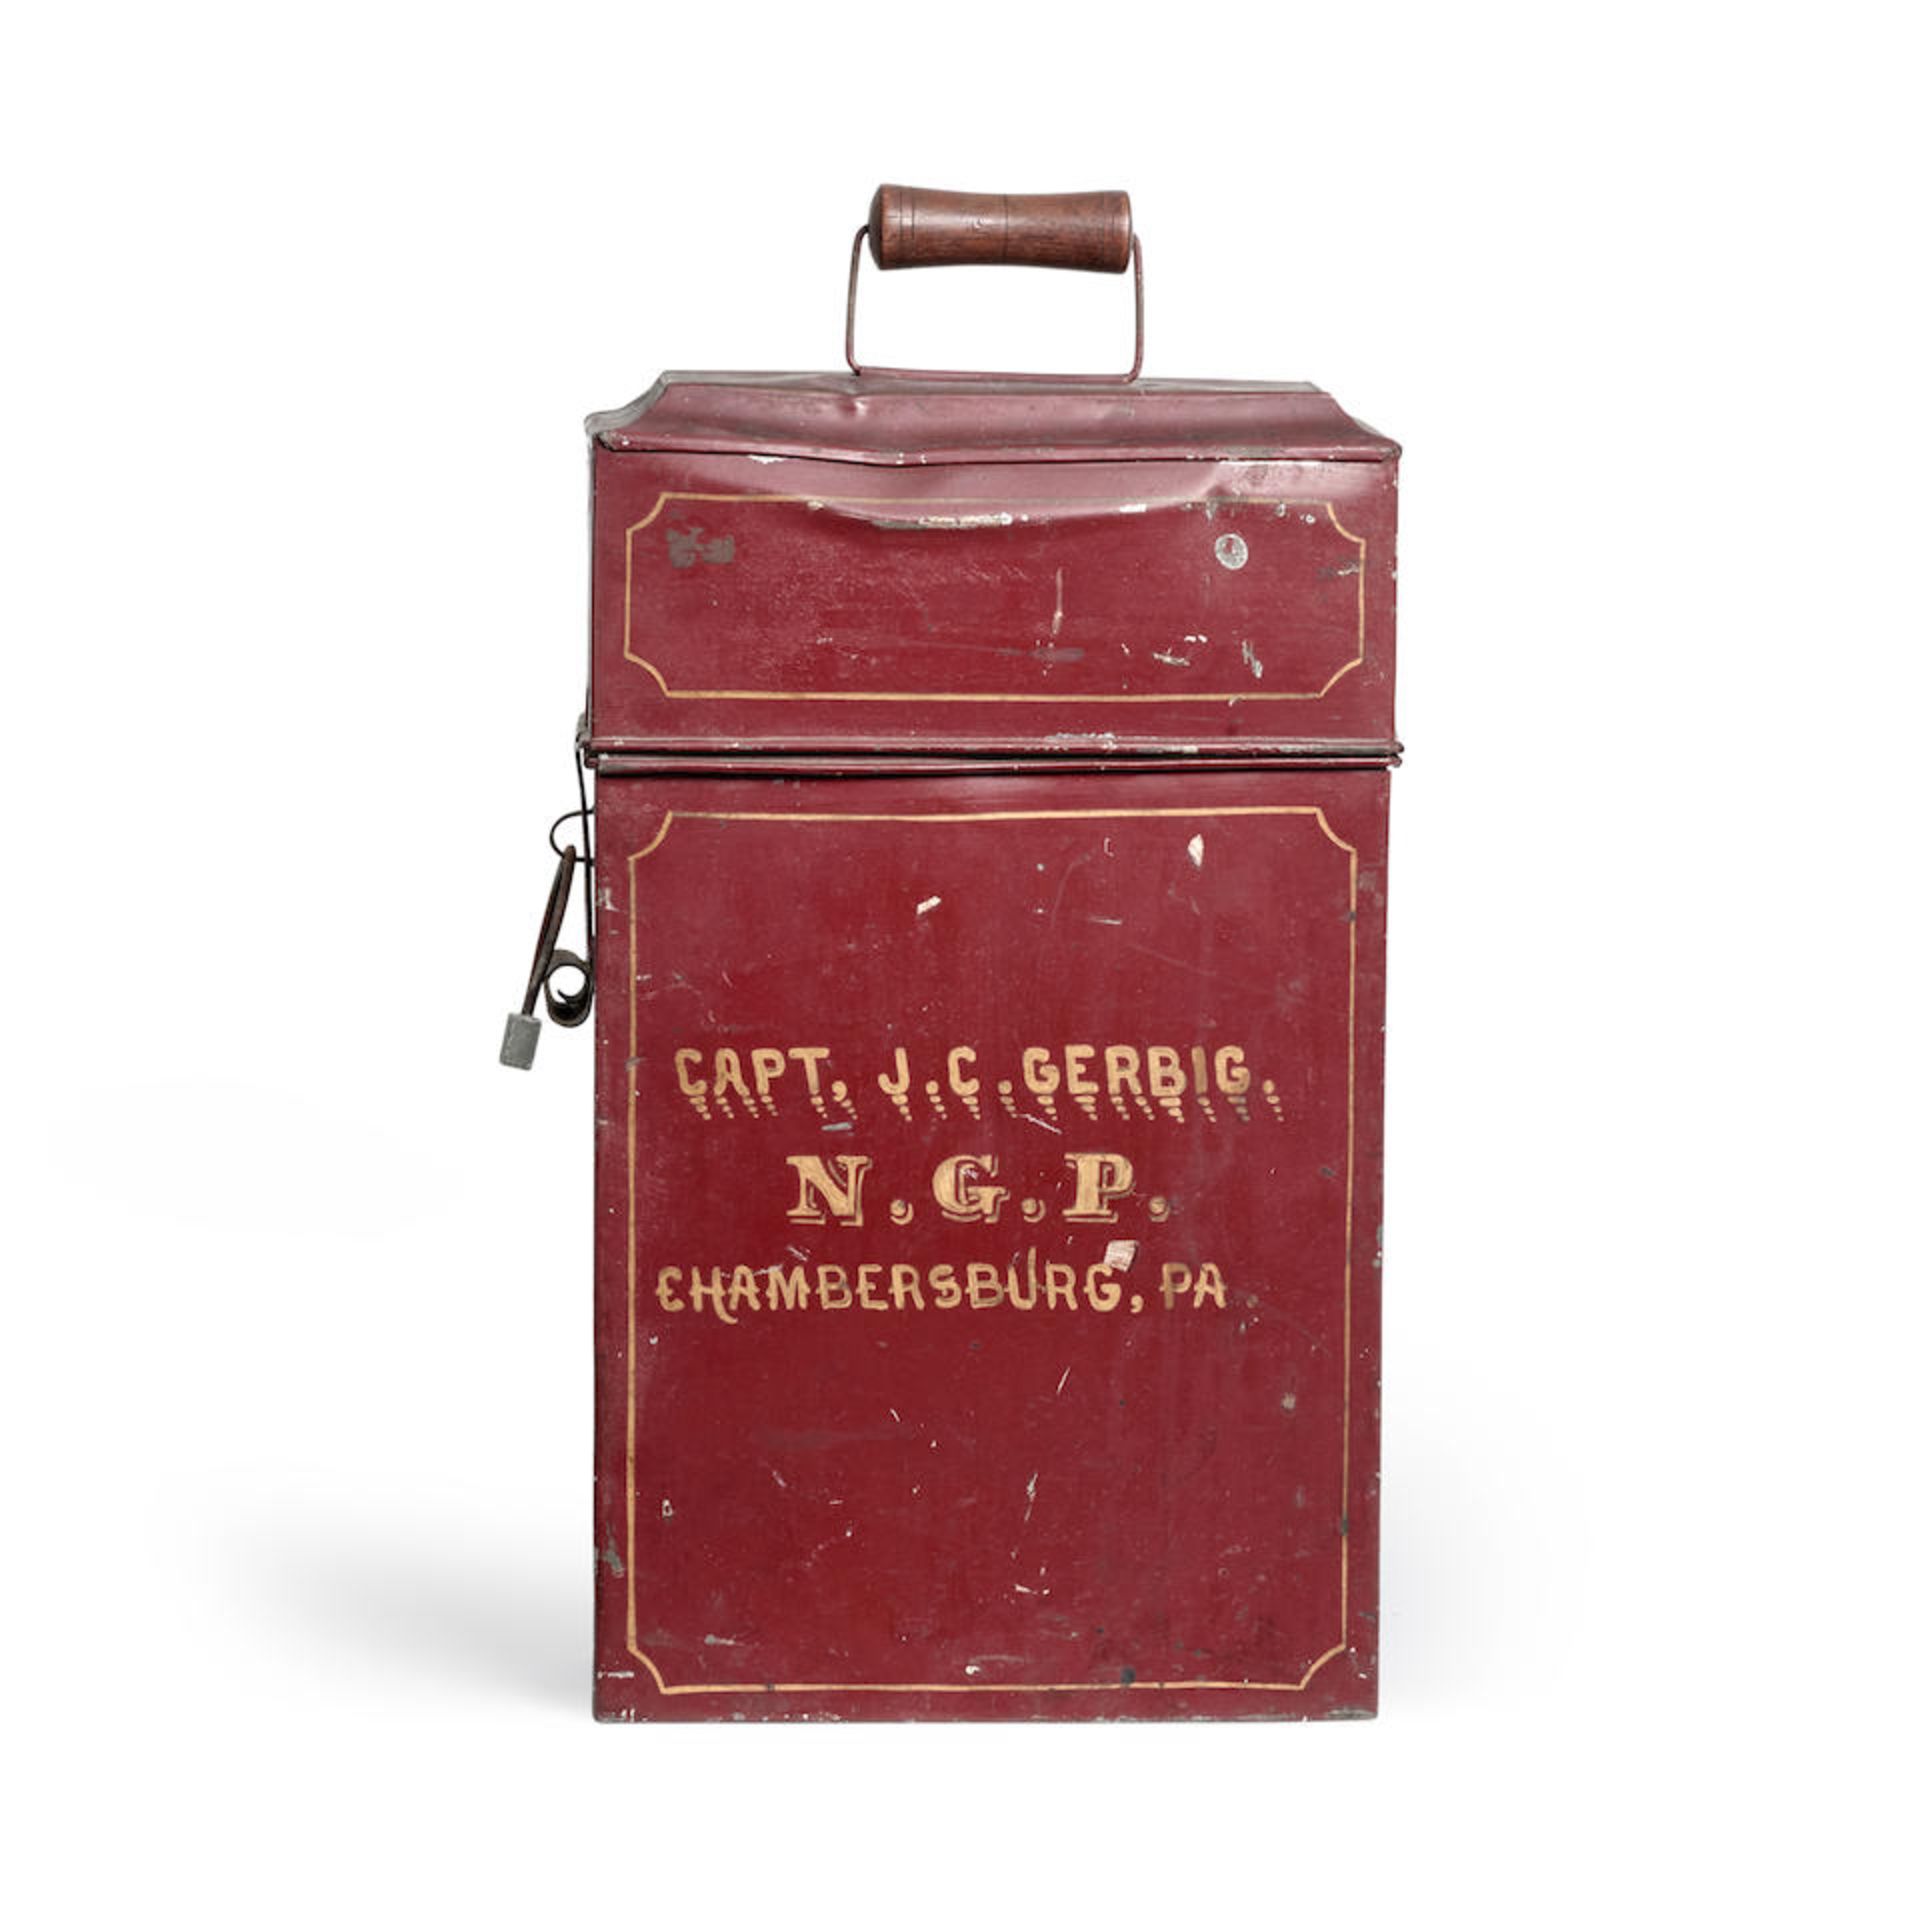 'Capt. J.C. Gerbig' Painted Tin Document Box, Chambersburg, Pennsylvania, c. 1890.